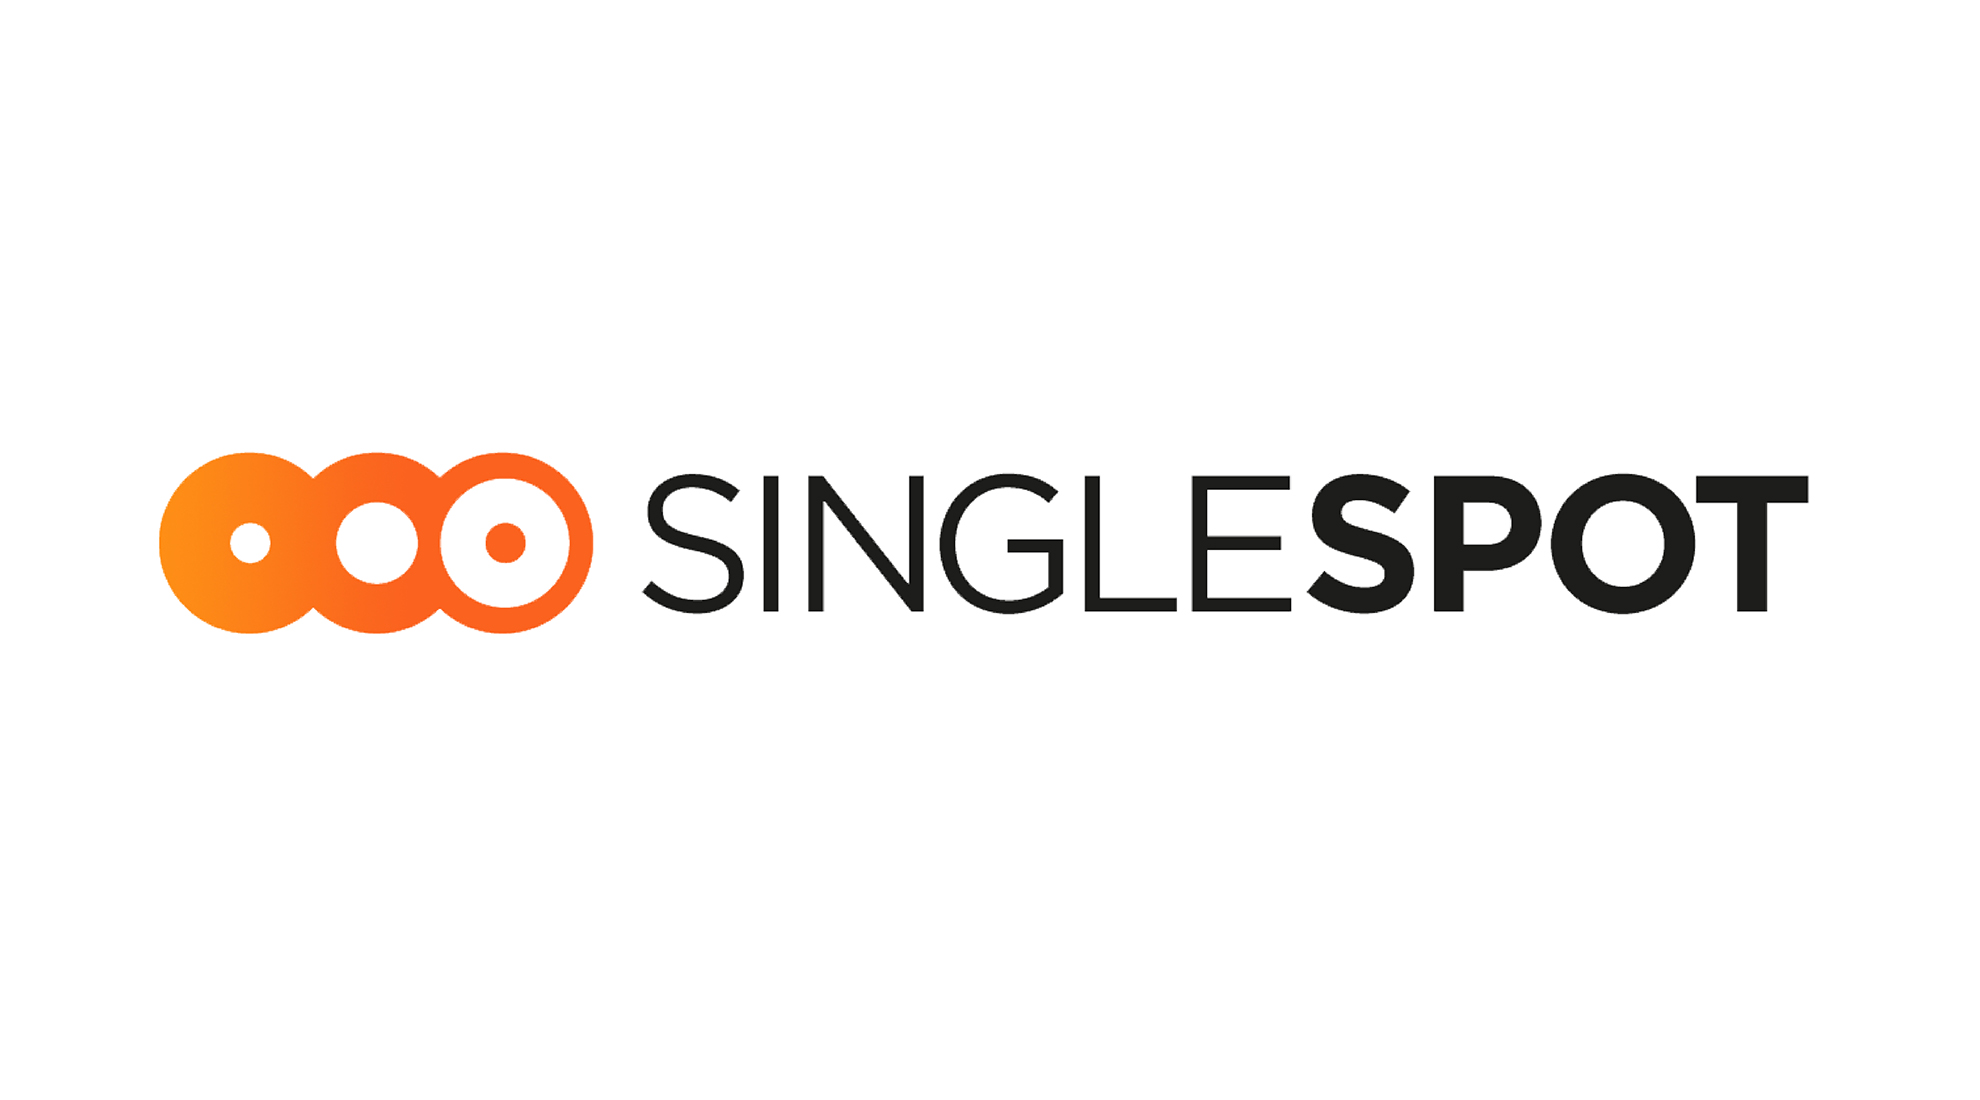 Singlespot